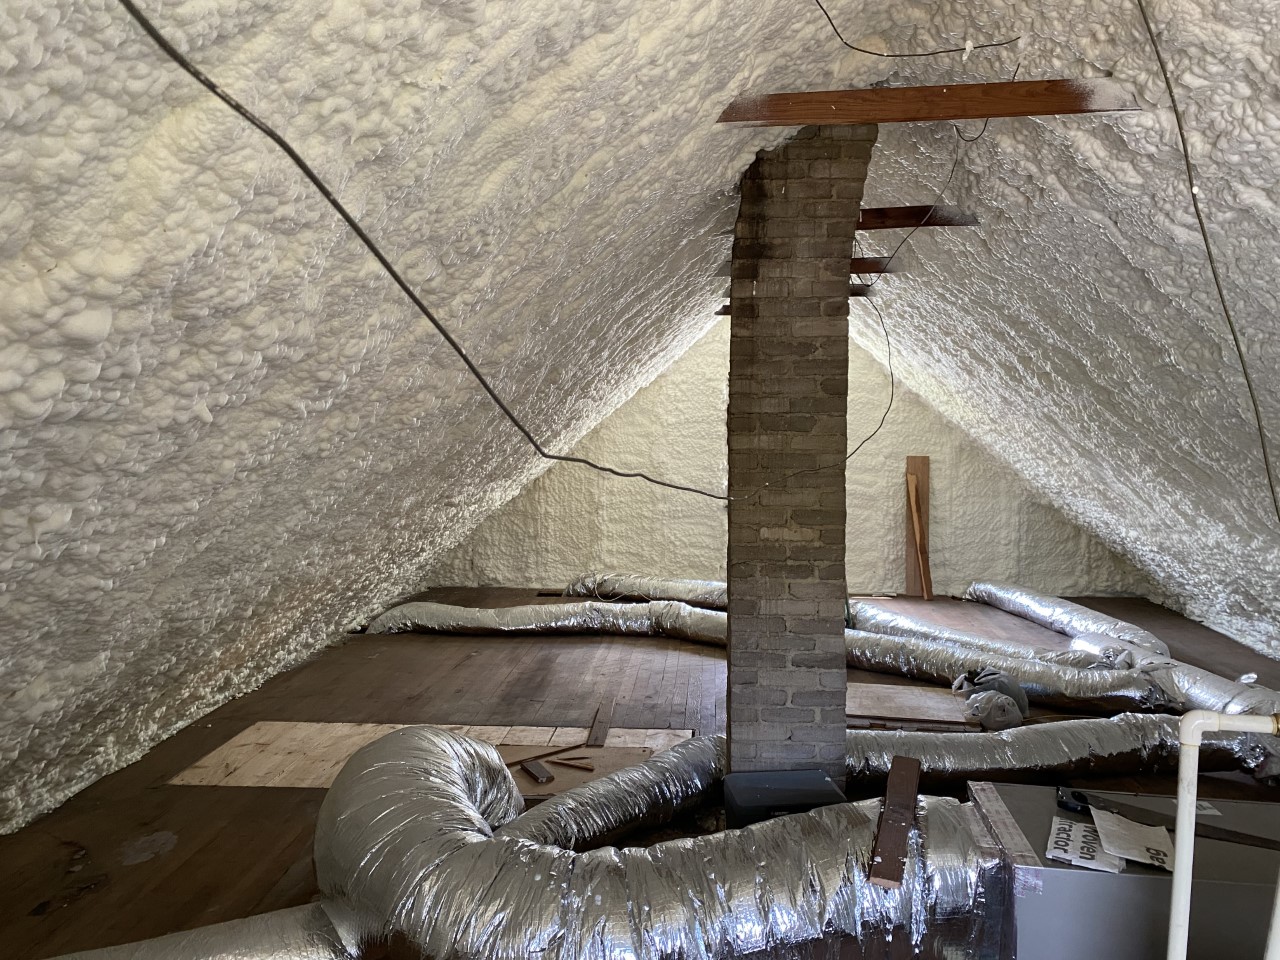 Spray foam insulation in an existing richmond va home insulation job